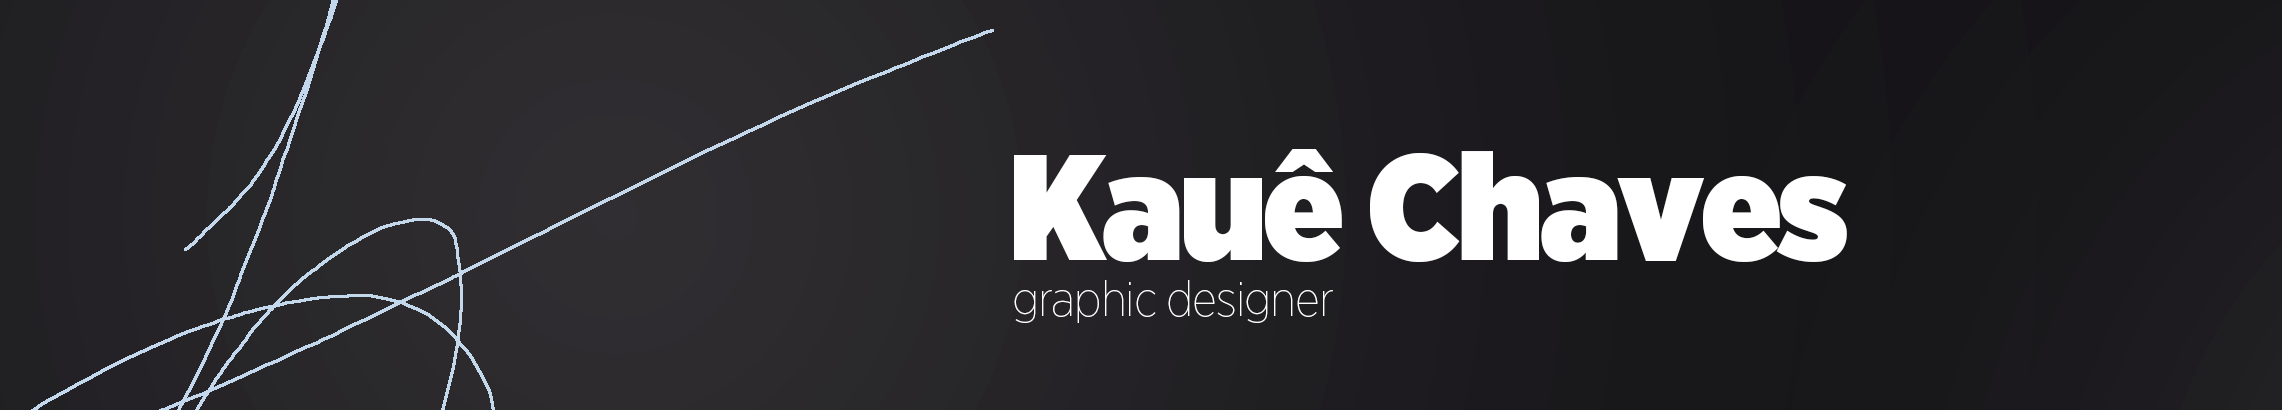 Kaue Chaves's profile banner